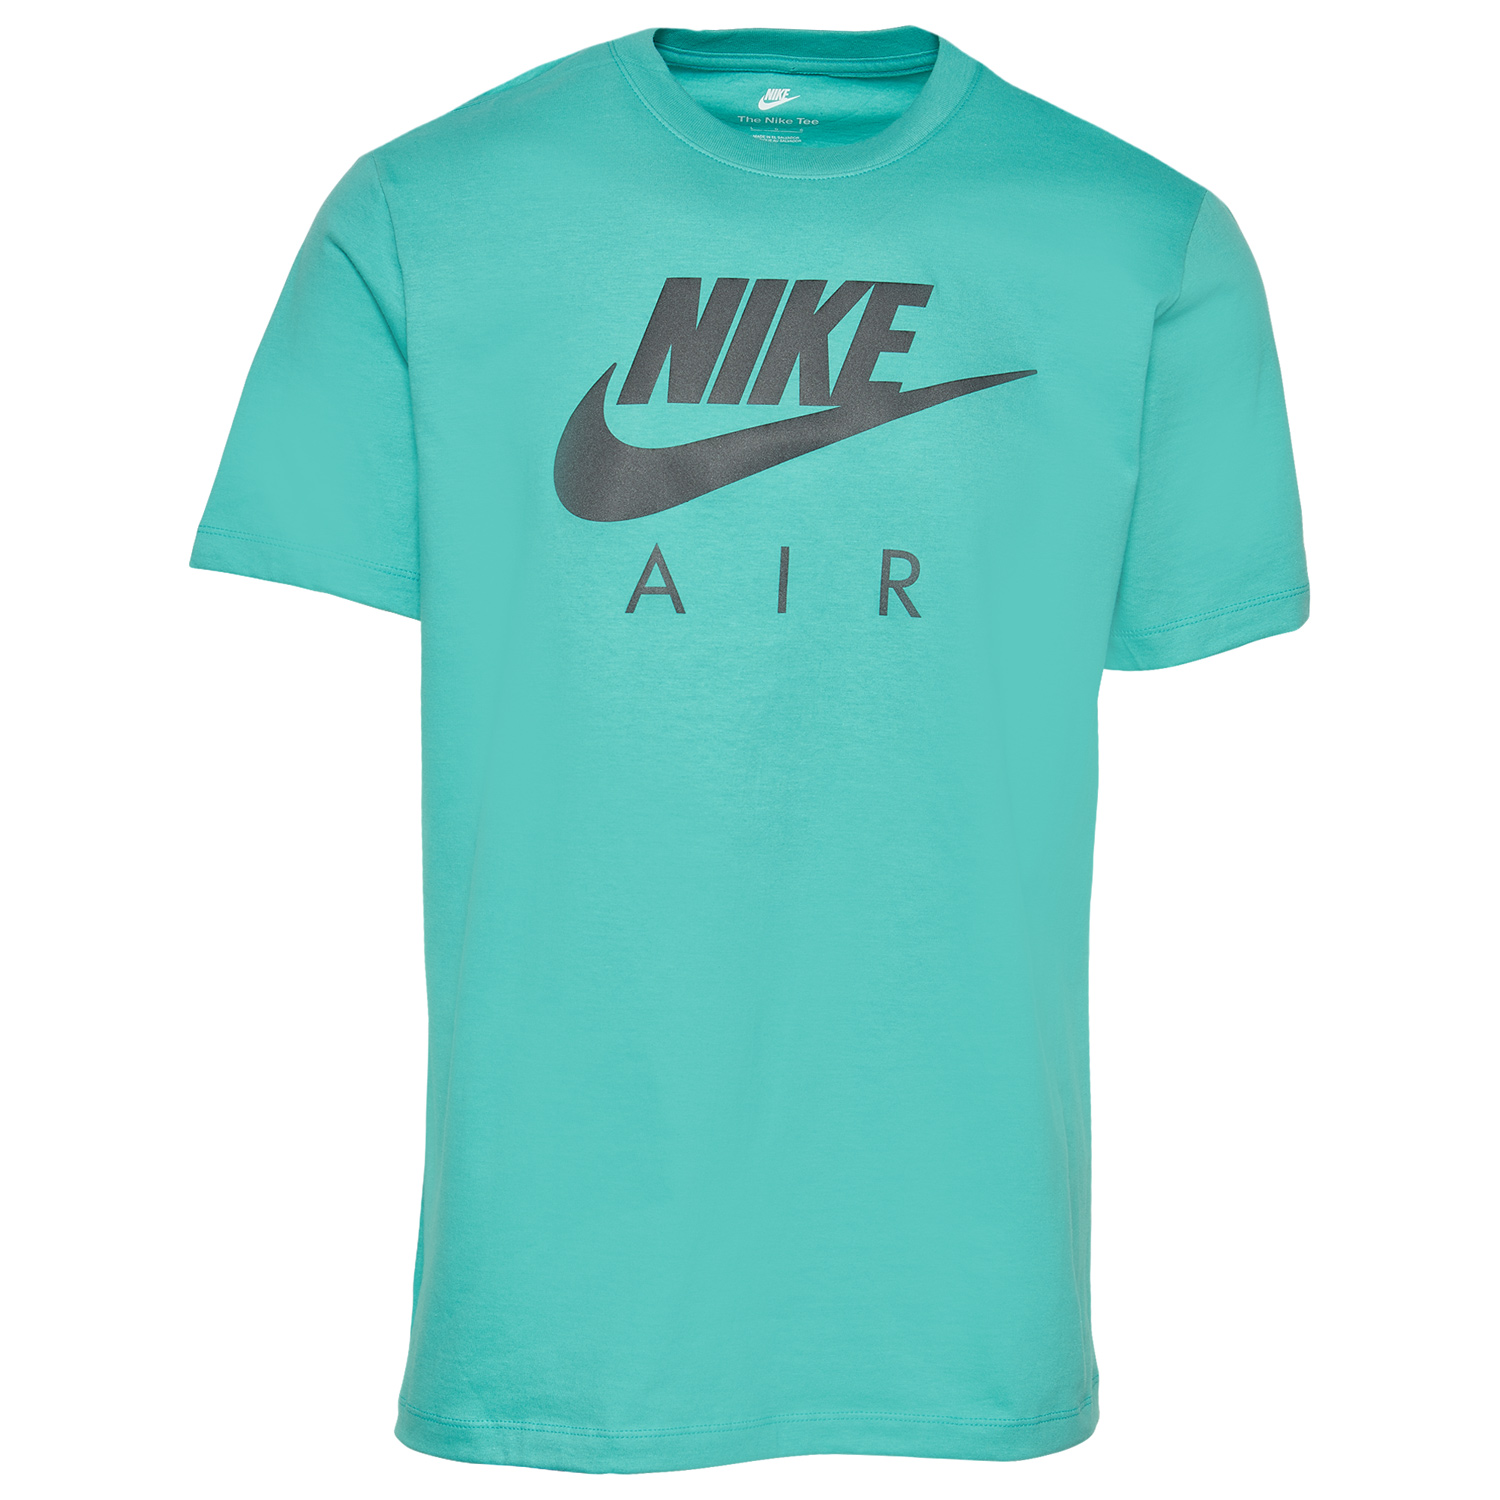 nike-air-reflective-t-shirt-washed-teal-1